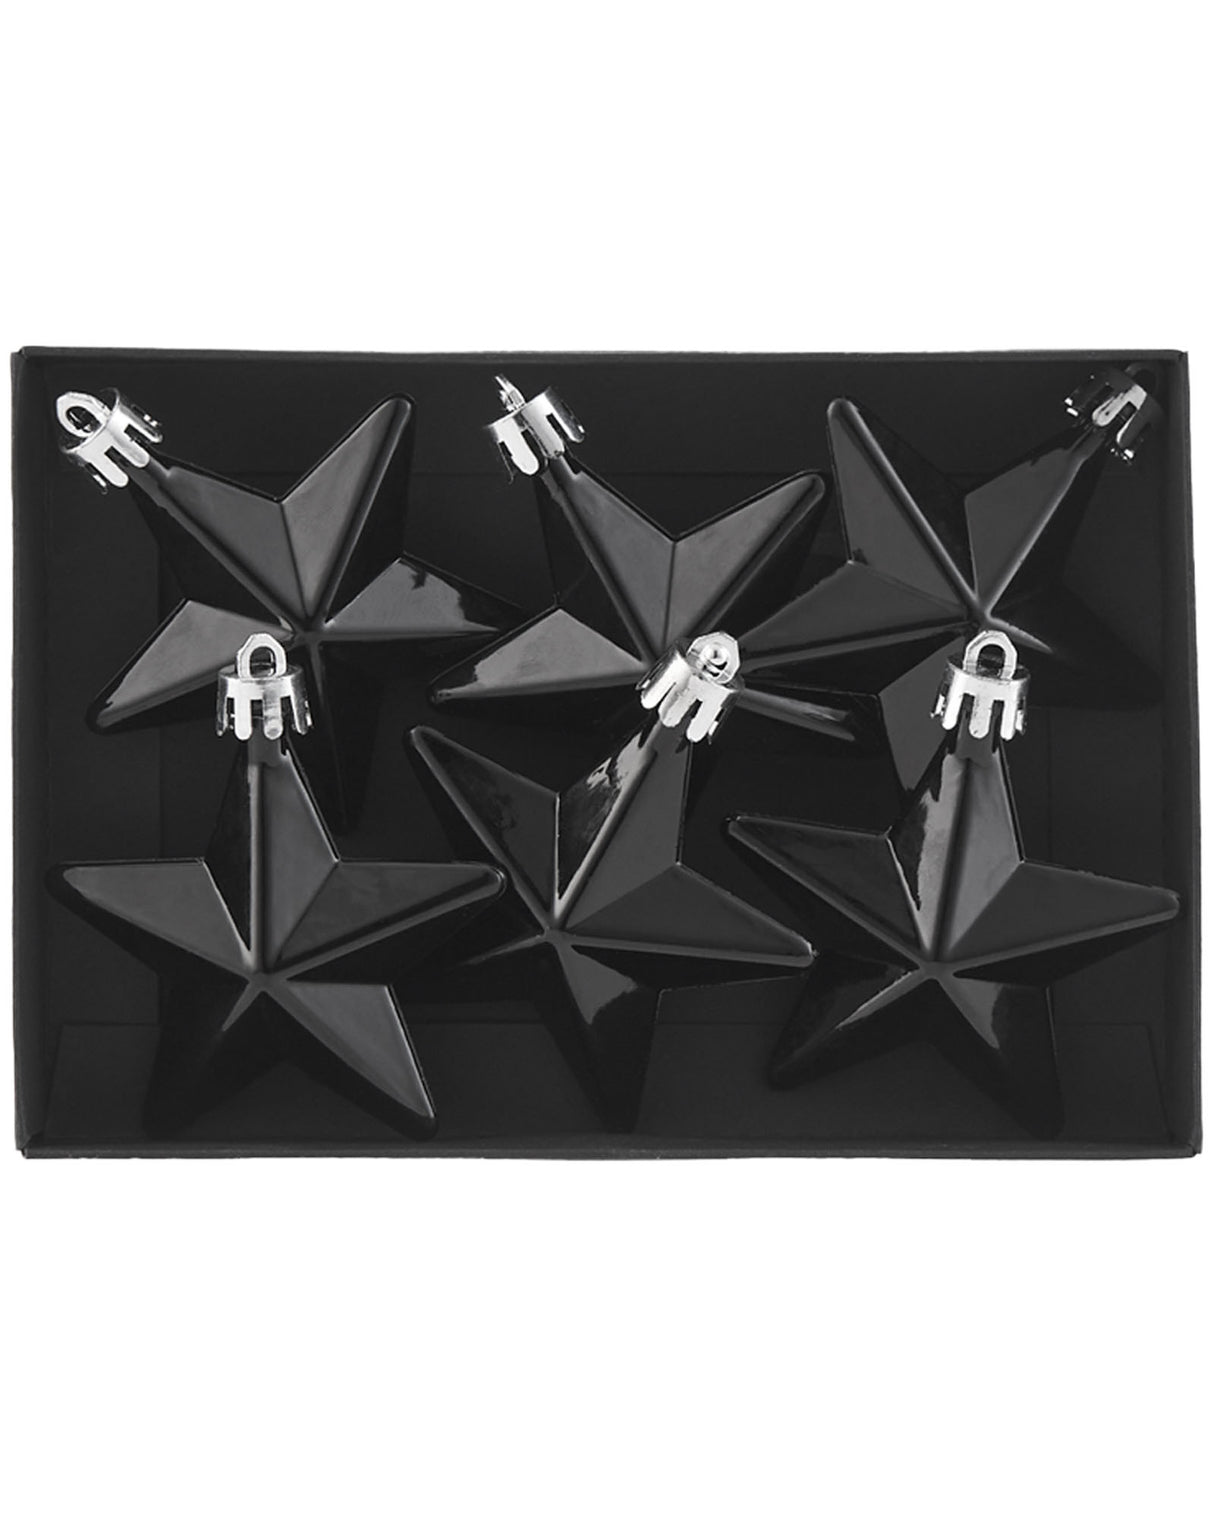 6 Pack of Hanging Stars, Black, 7.5 cm